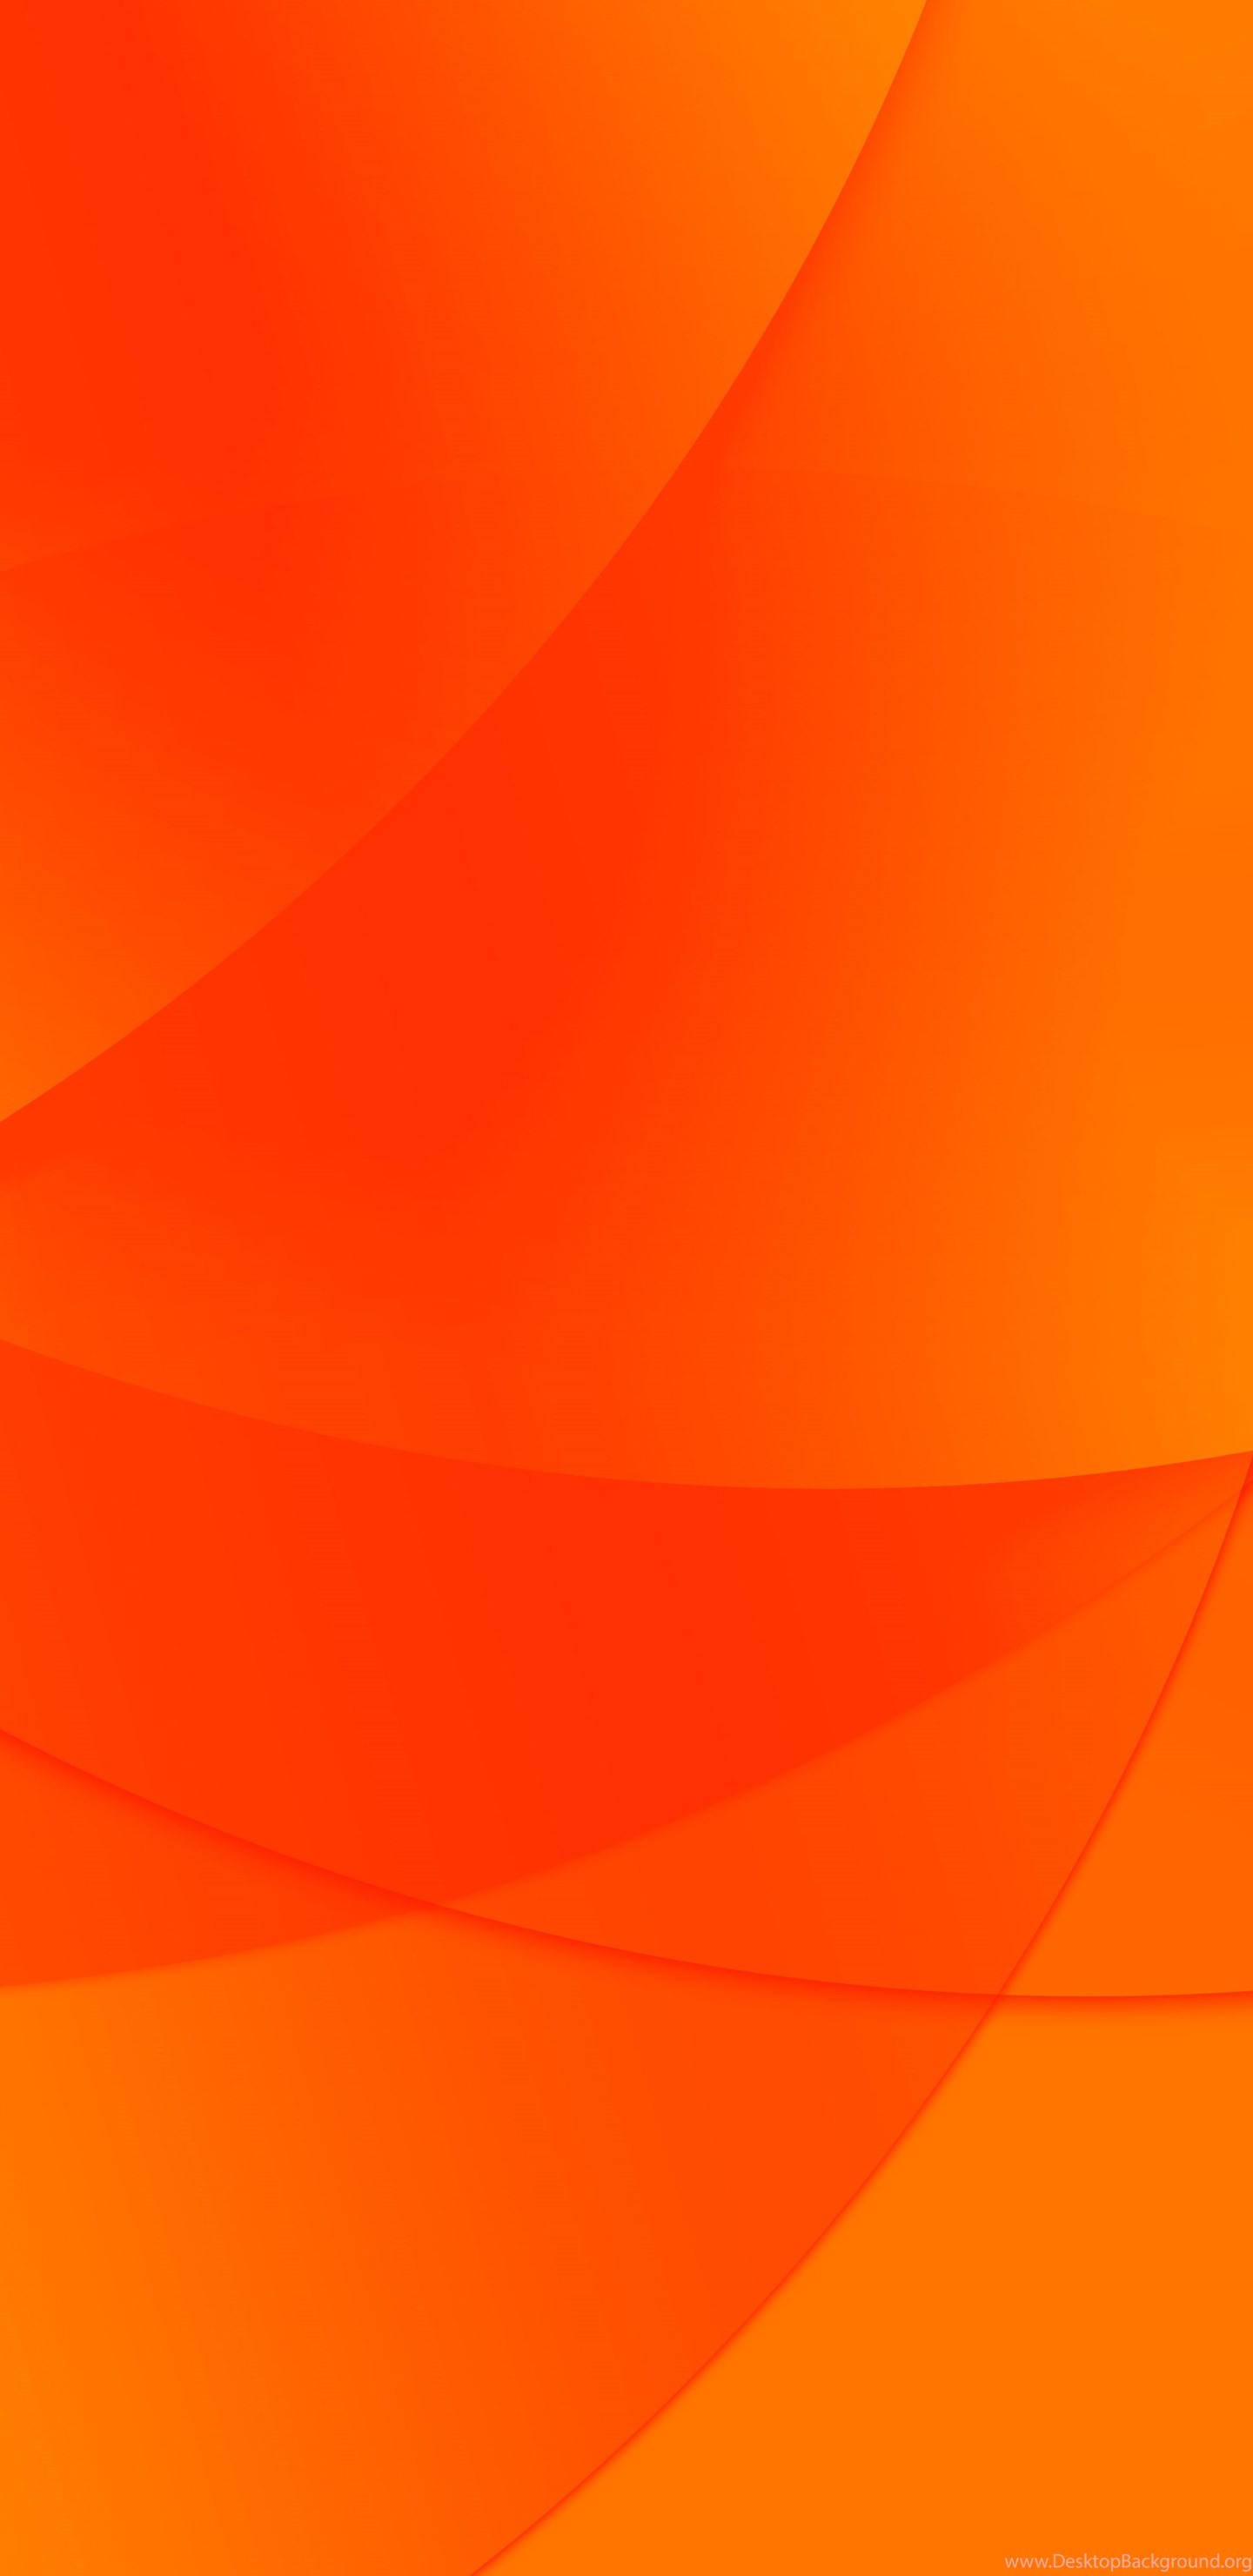 Orange Background Clipart Best Cliparts For You Desktop Background